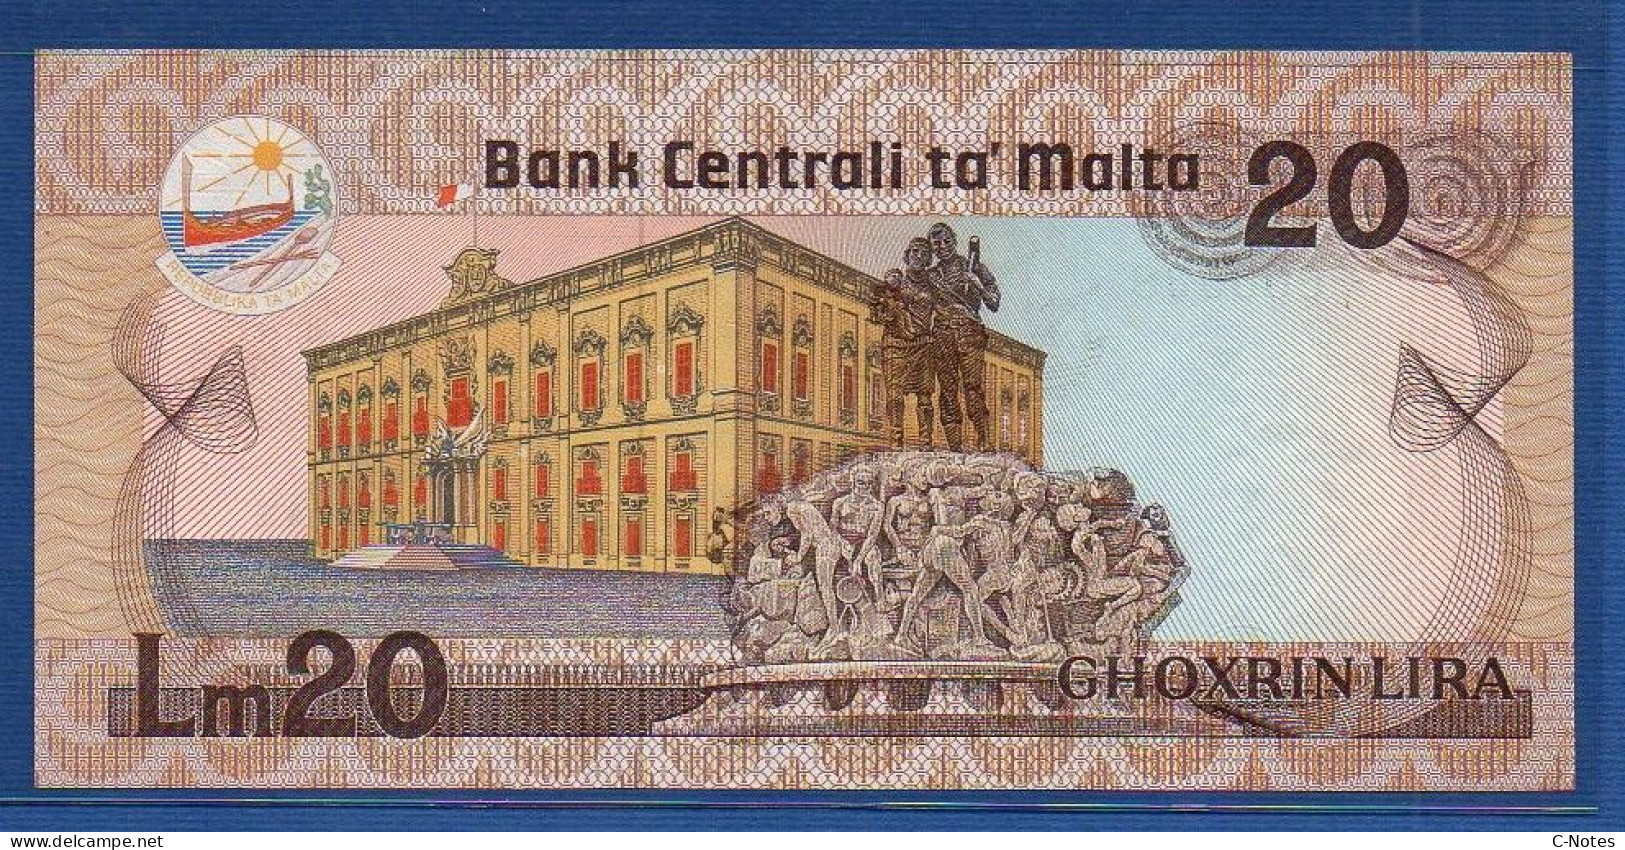 MALTA - P.40 – 20 Liri L. 1967 (1986) UNC, S/n D/I 000338 "Agata Barbara" Issue  - LOW NUMBER - Malte